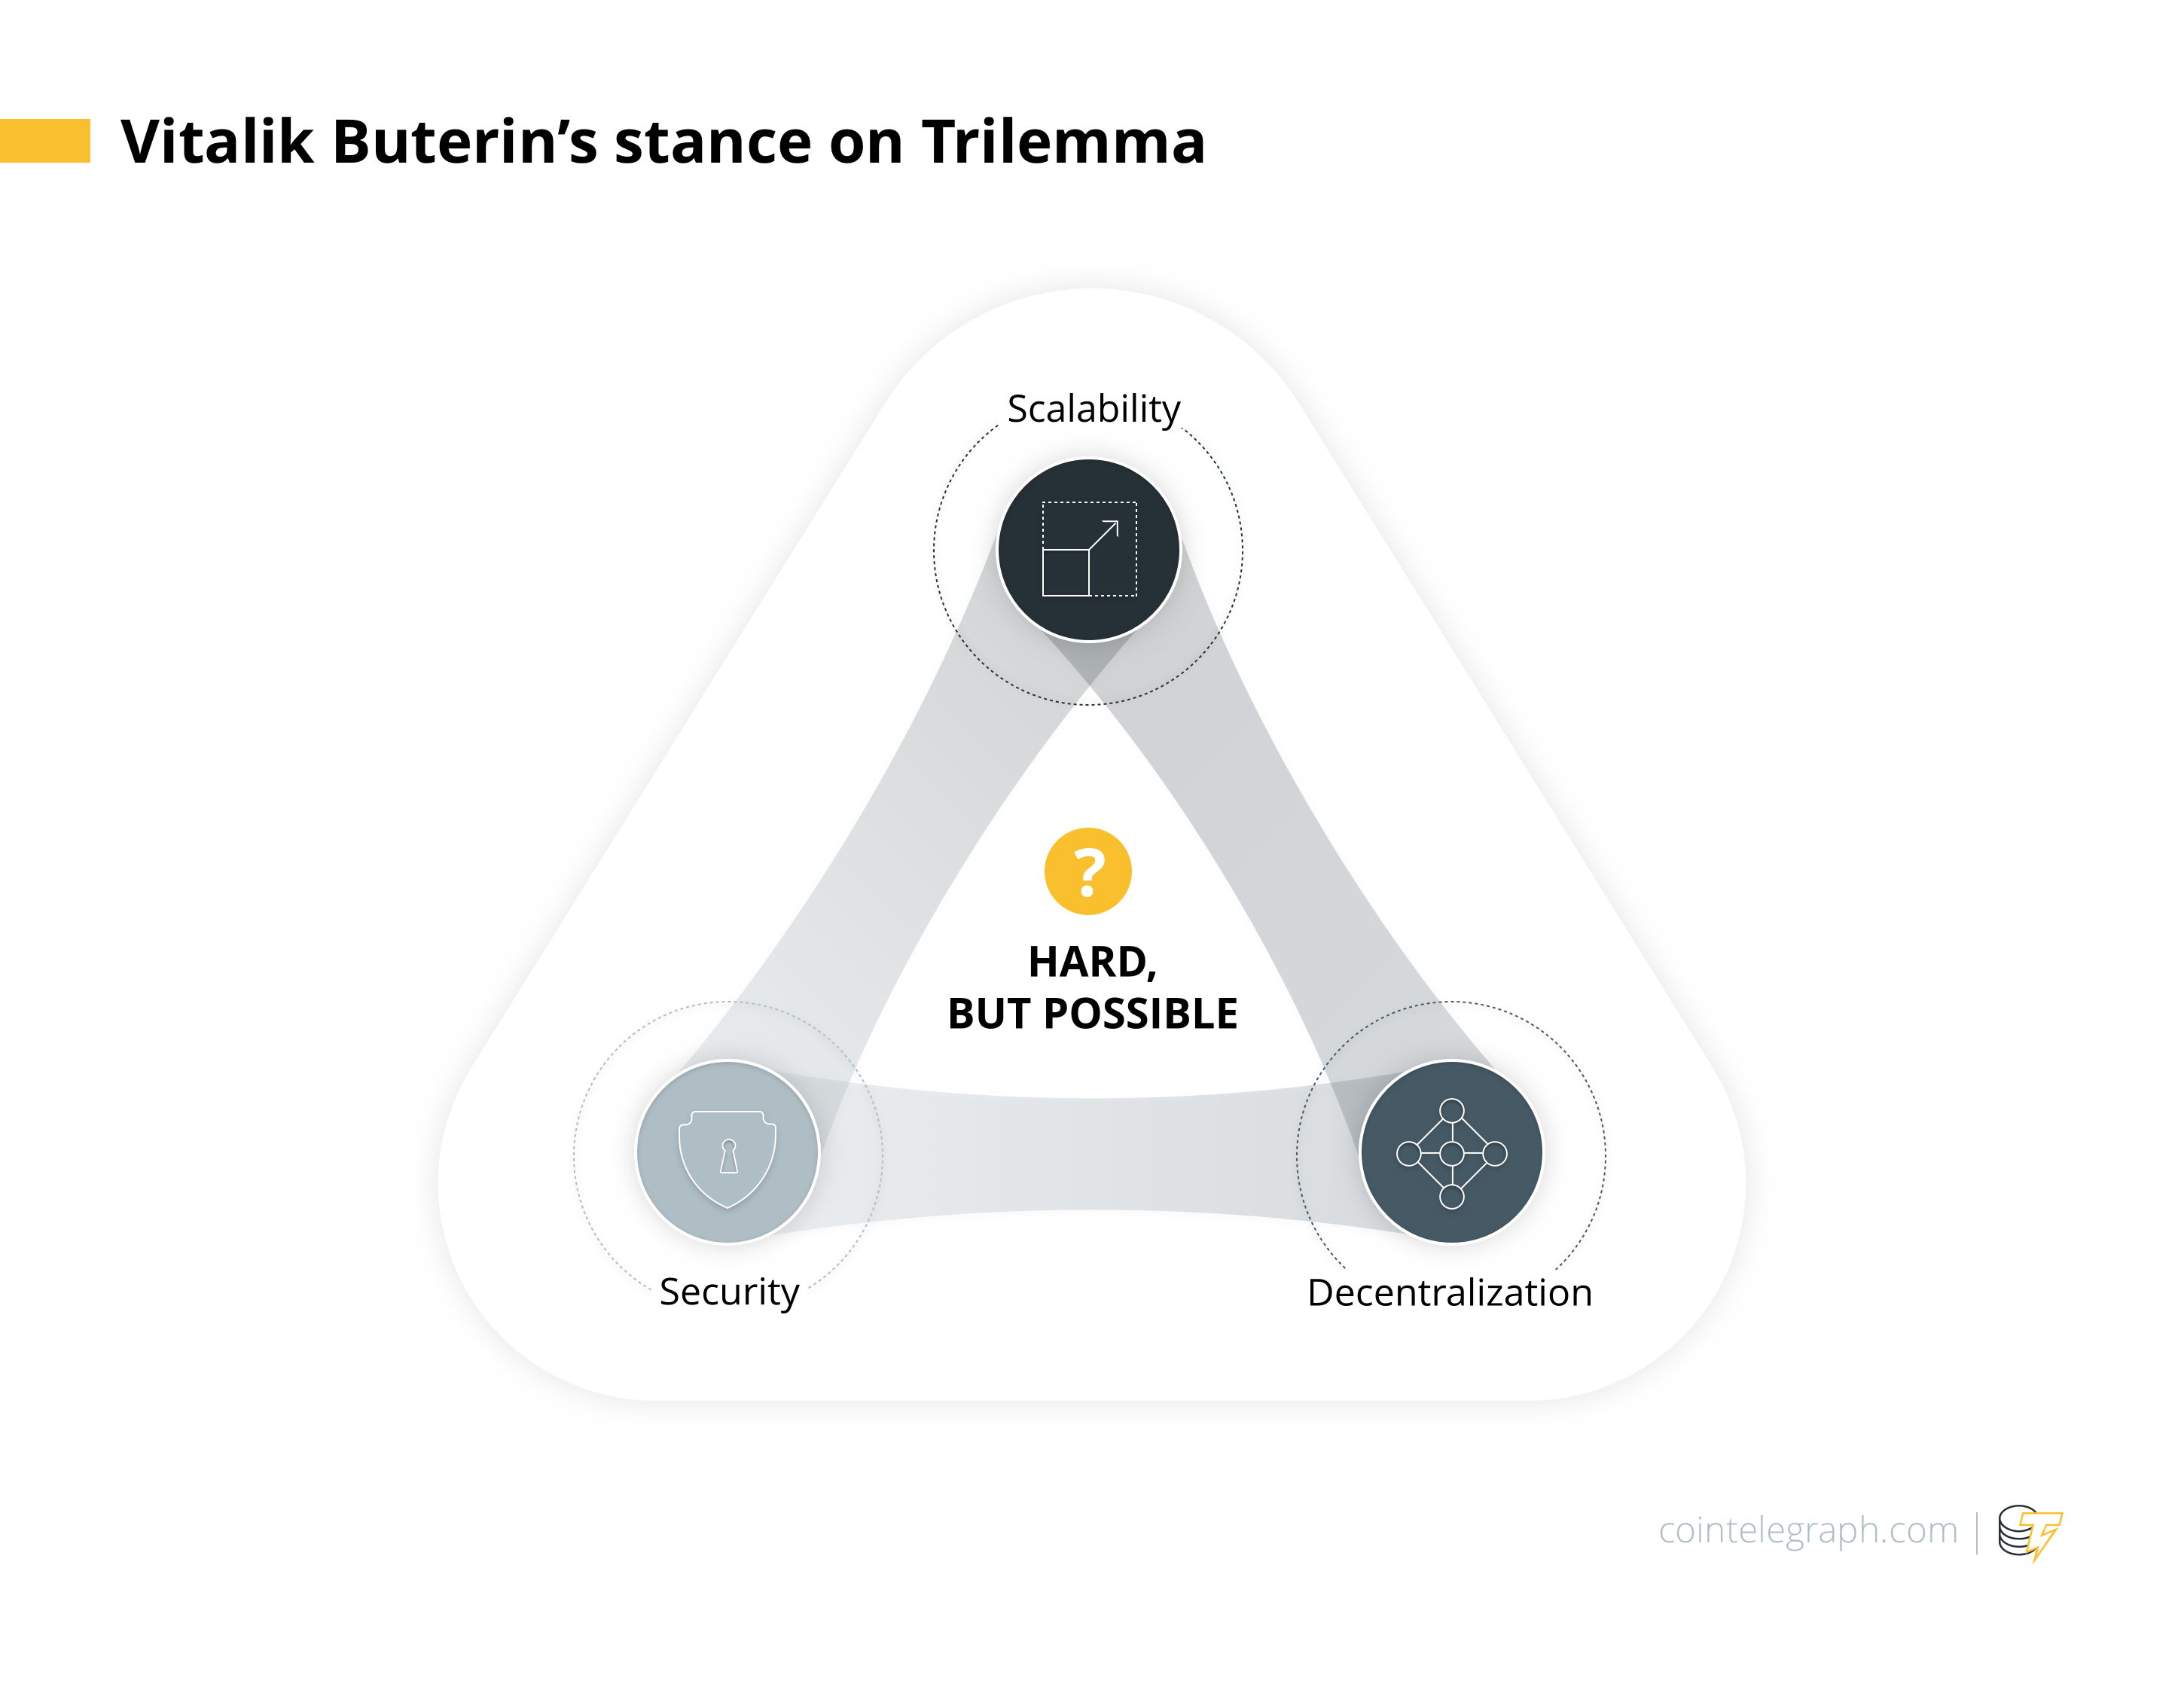 Vitalik Buterin’s stance on Trilemma